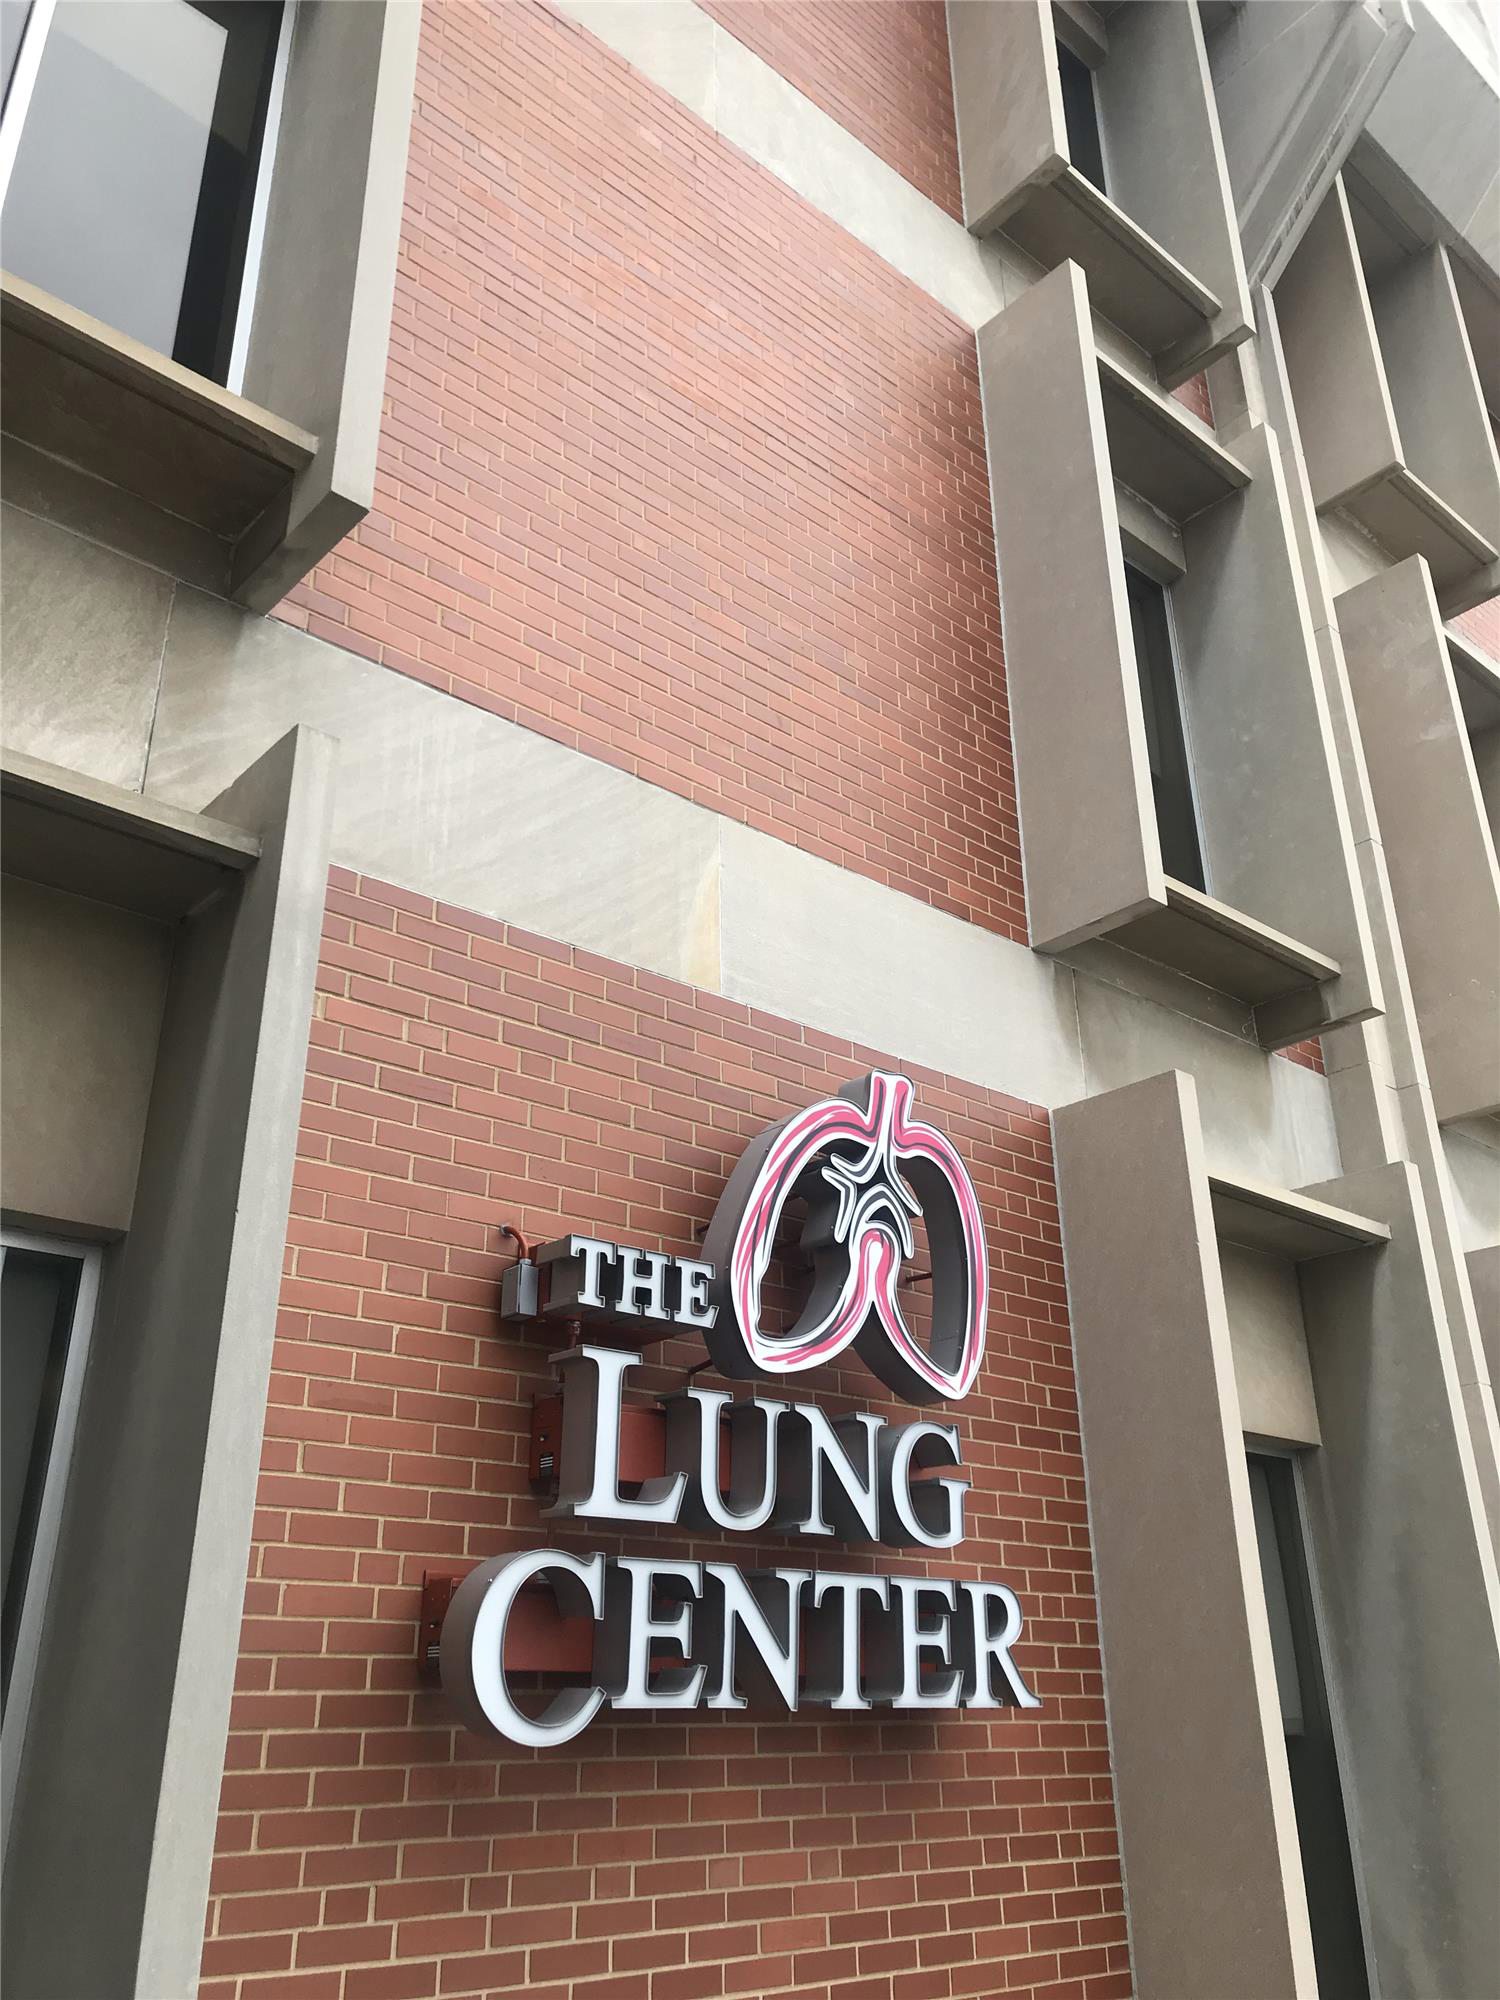 The Lung Center building logo